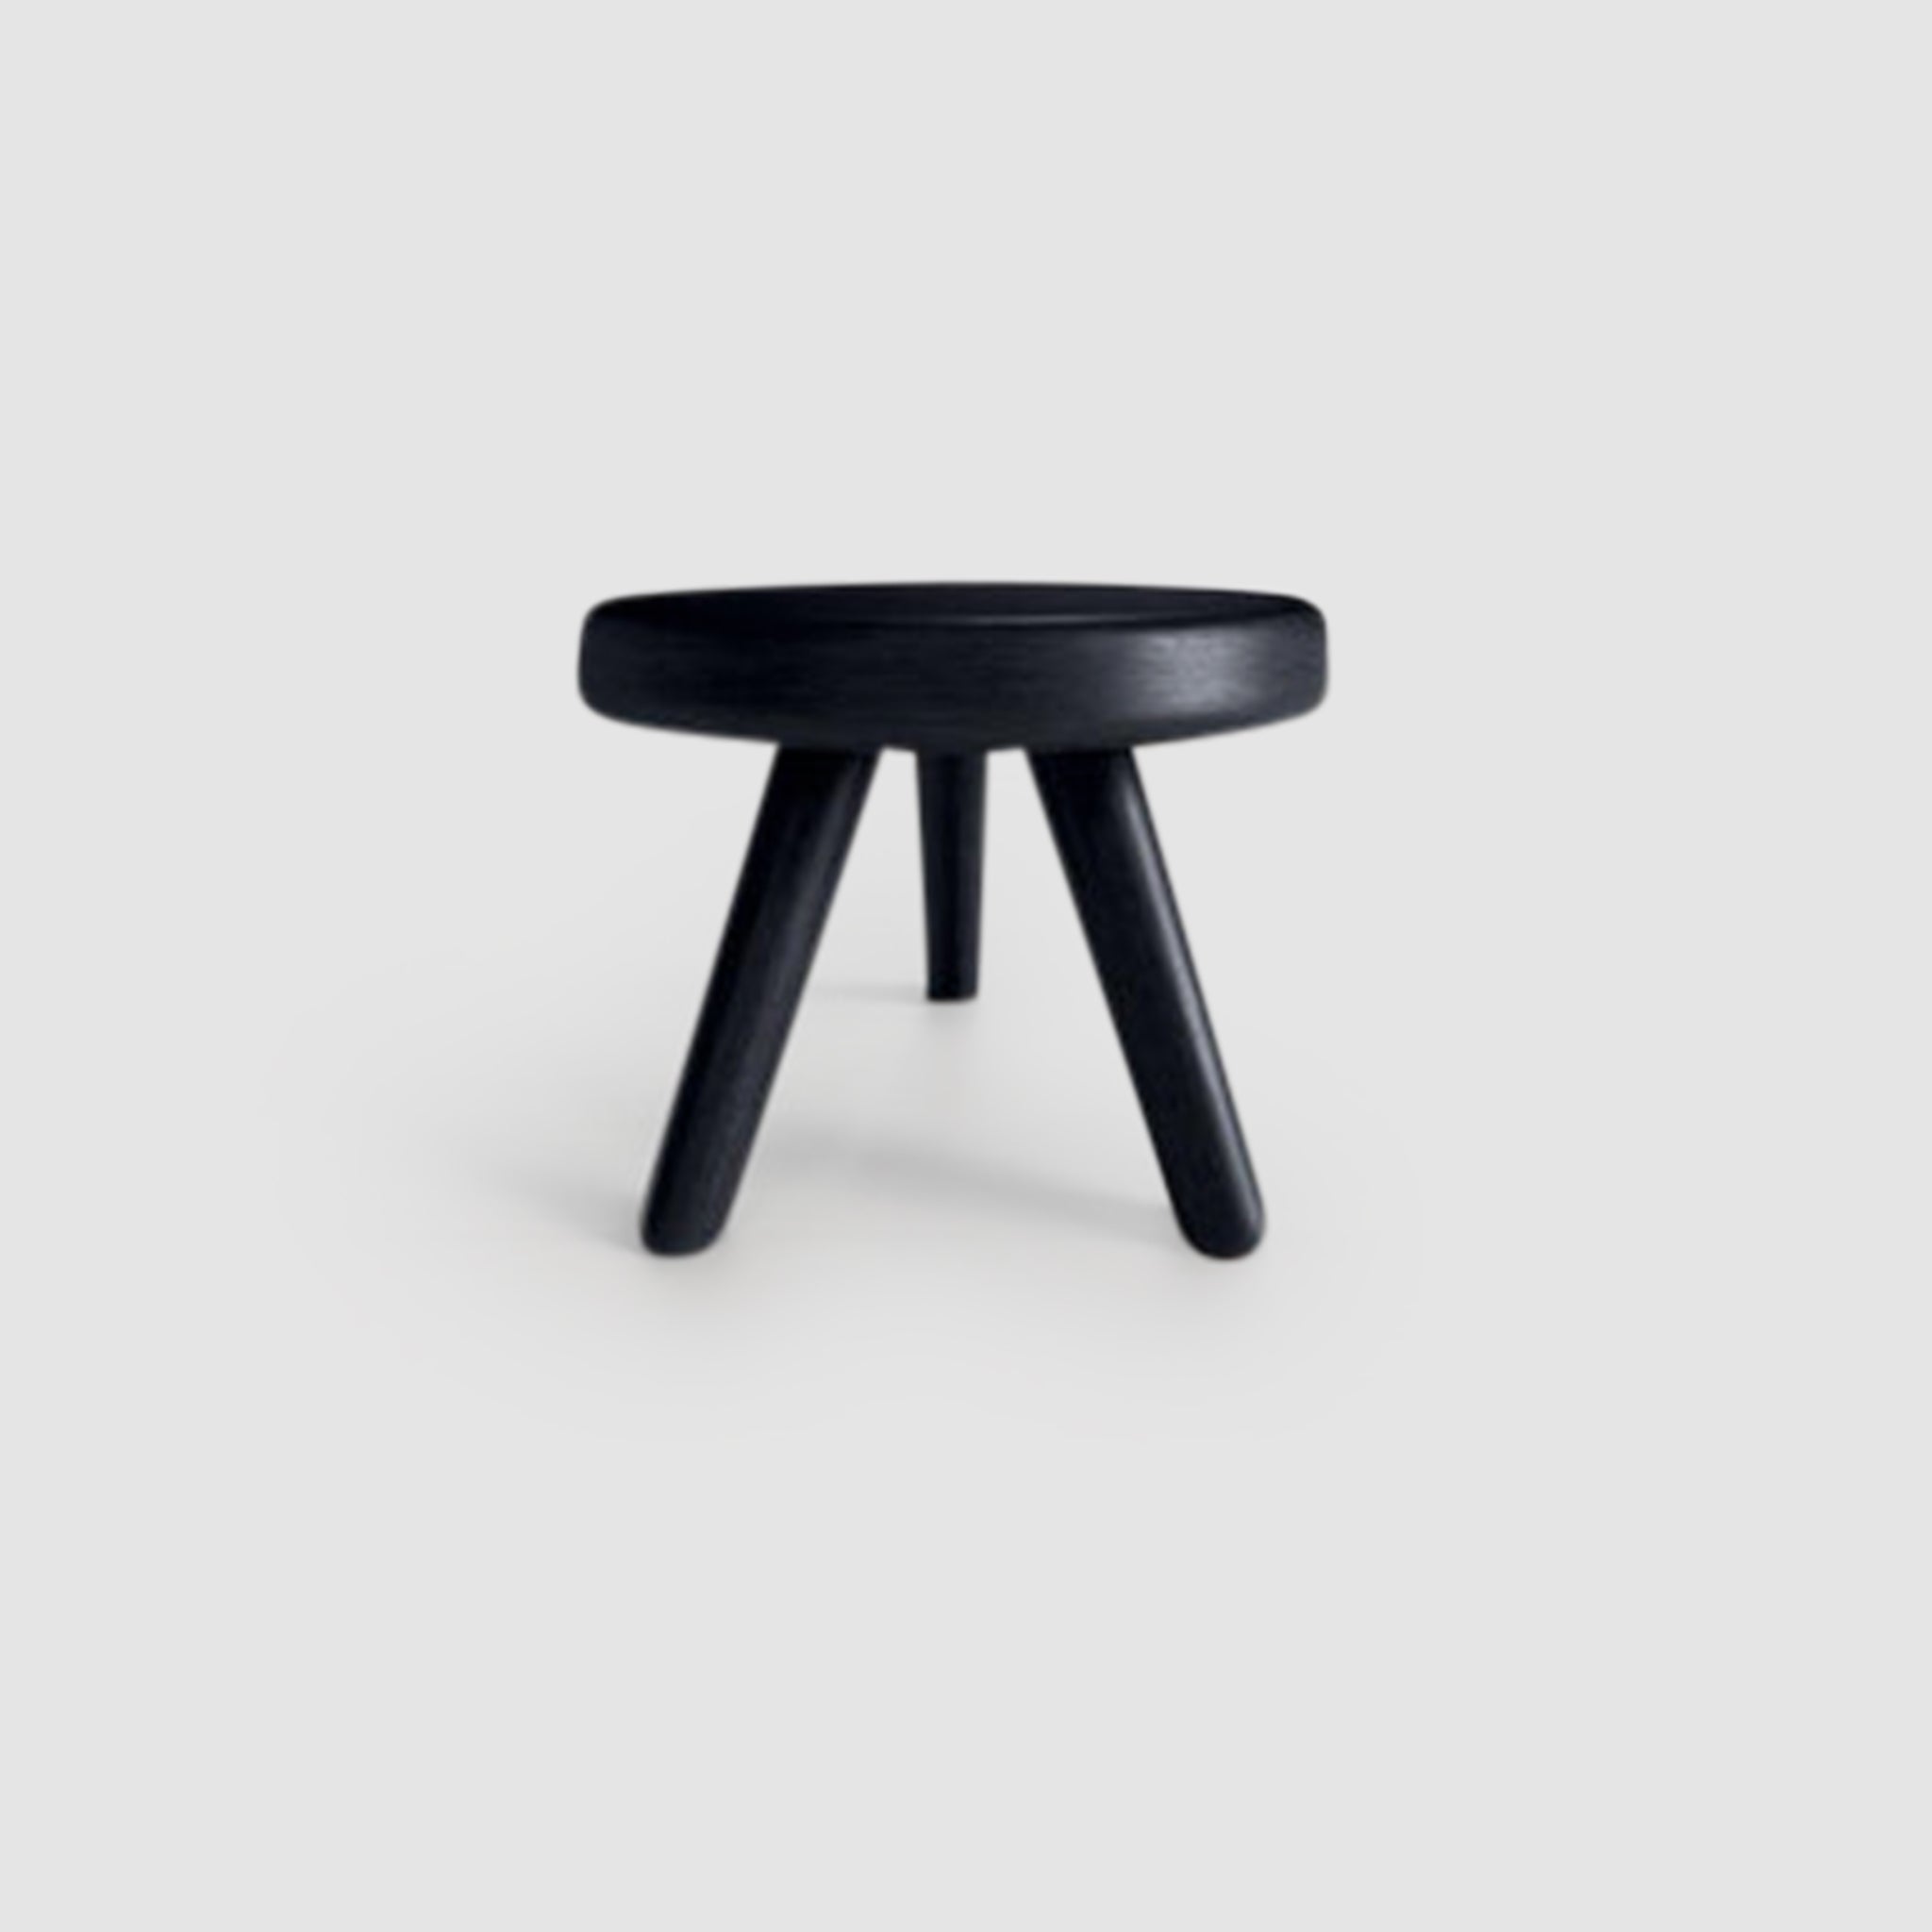 Black wooden three-legged mini stool with a round seat